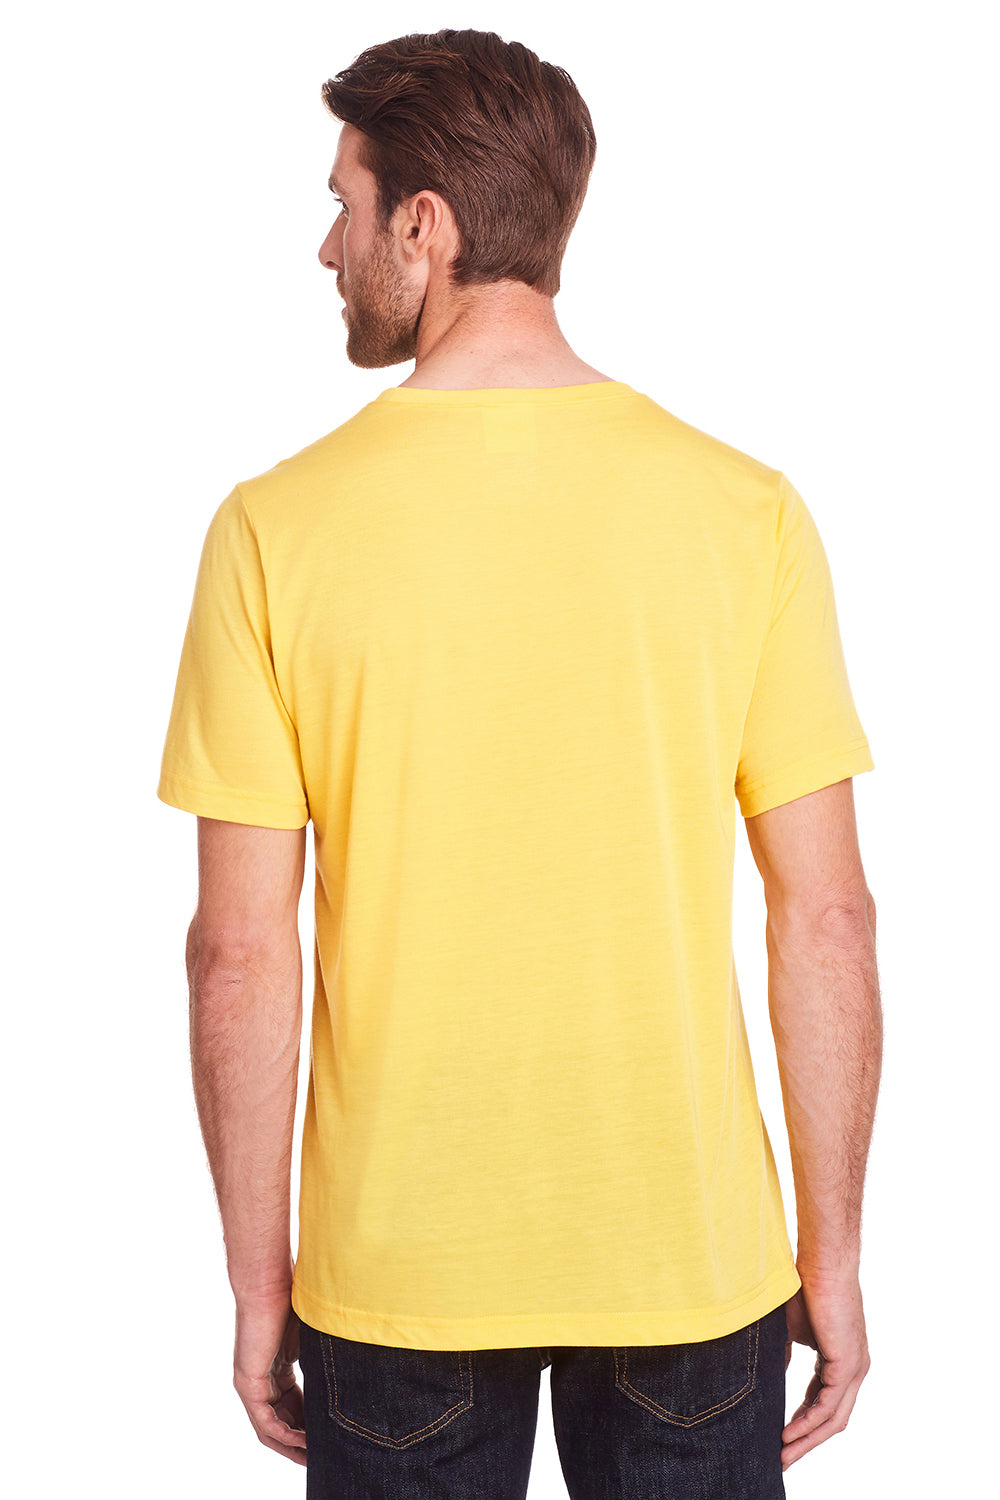 Core 365 CE111 Mens Fusion ChromaSoft Performance Moisture Wicking Short Sleeve Crewneck T-Shirt Gold Back